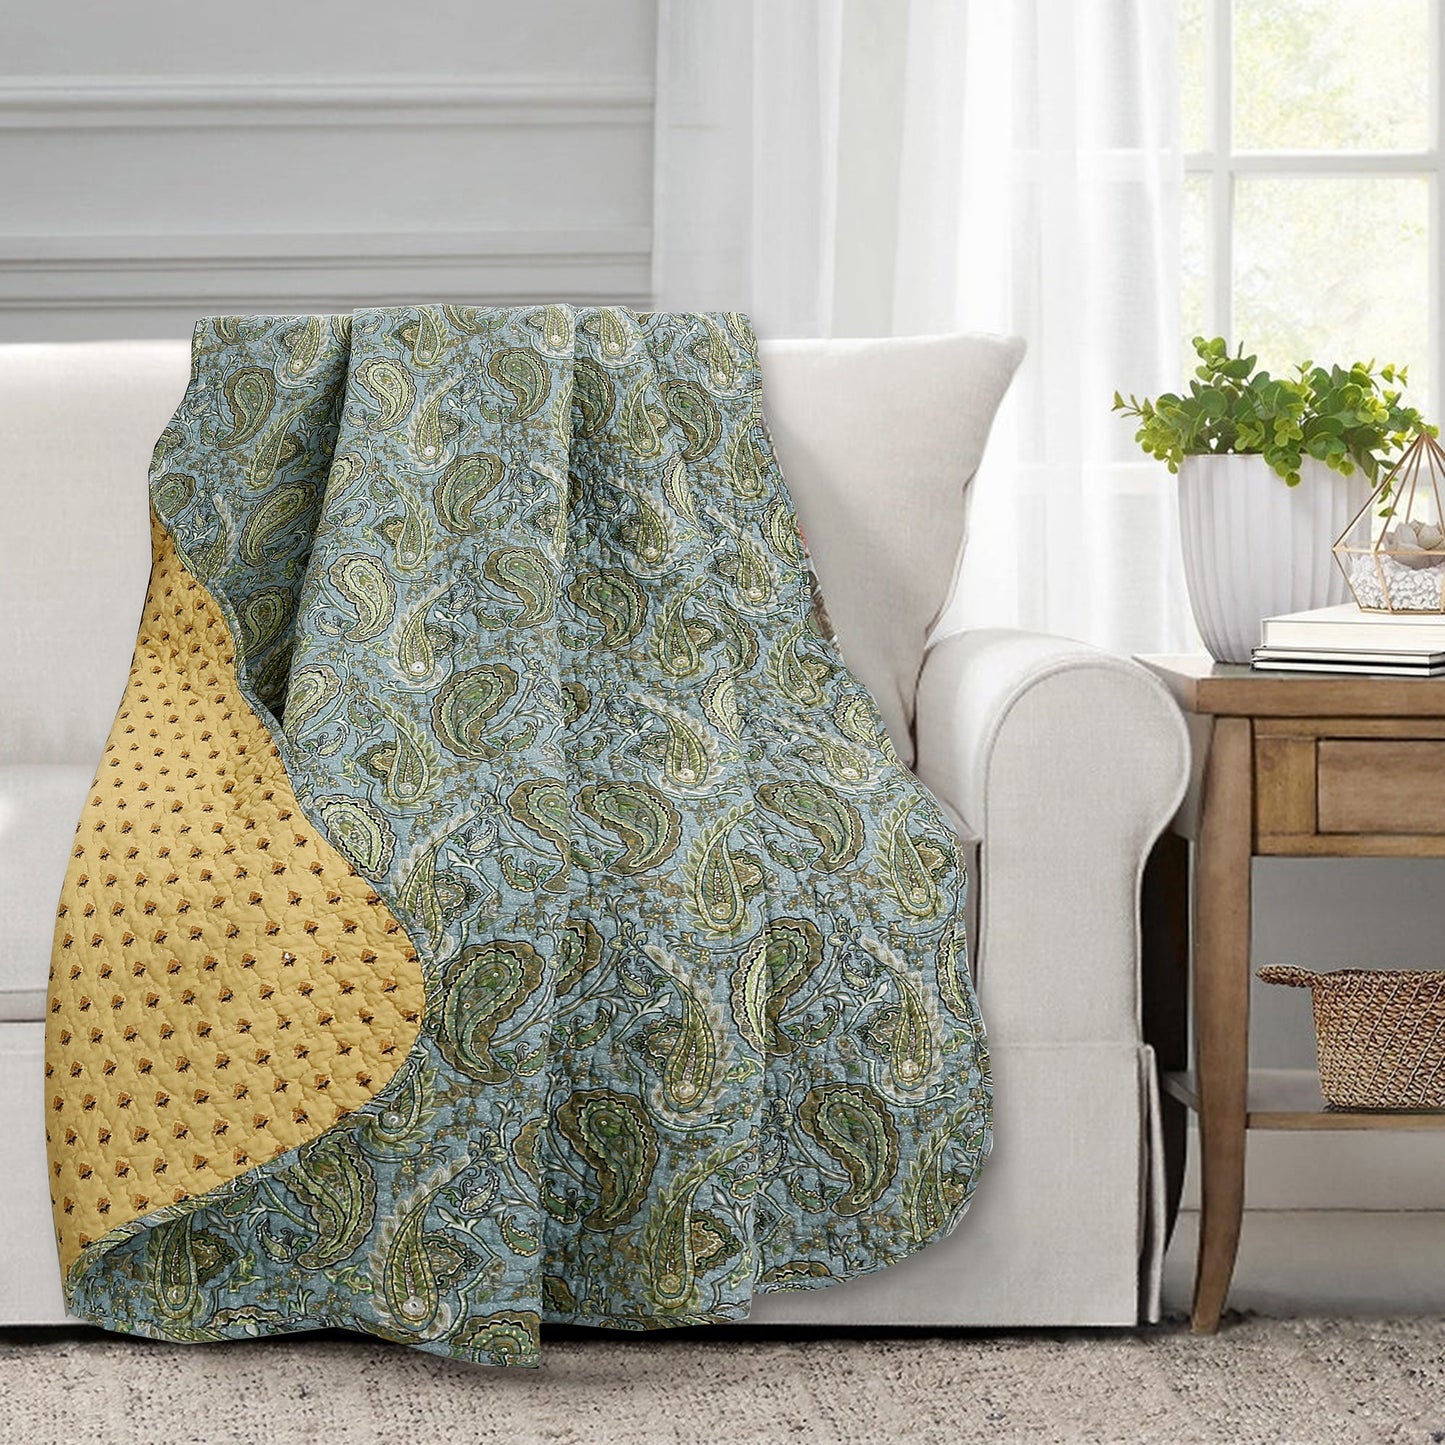 Green Blue Persian Paisley Scalloped Cotton 3-Piece Reversible Quilt Bedding Set